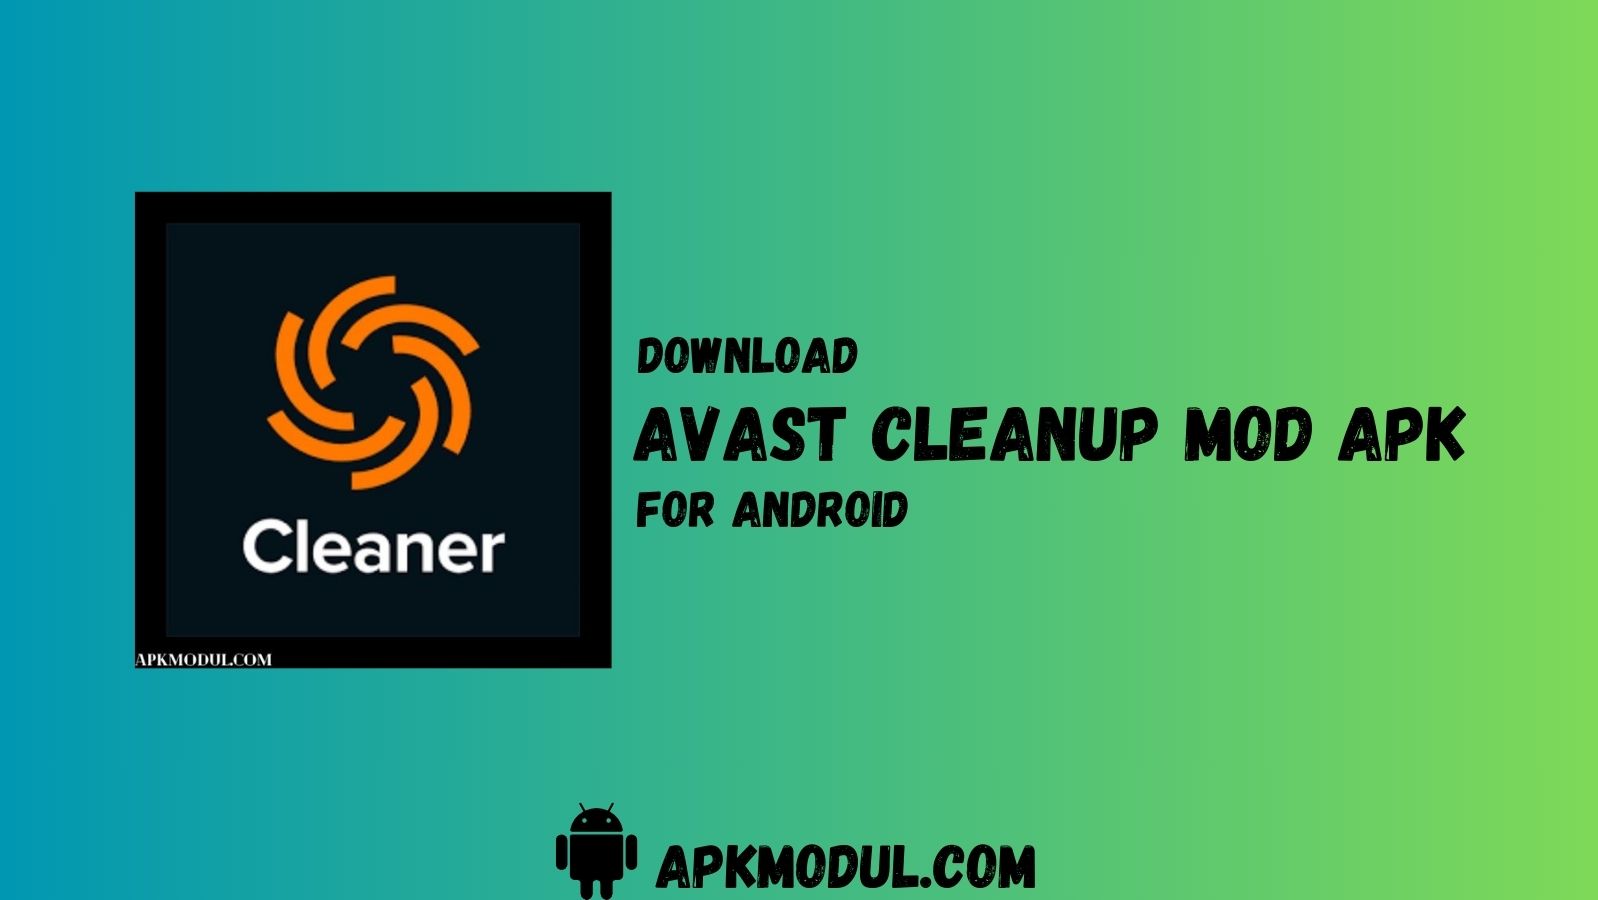 Avast Cleanup MOD App